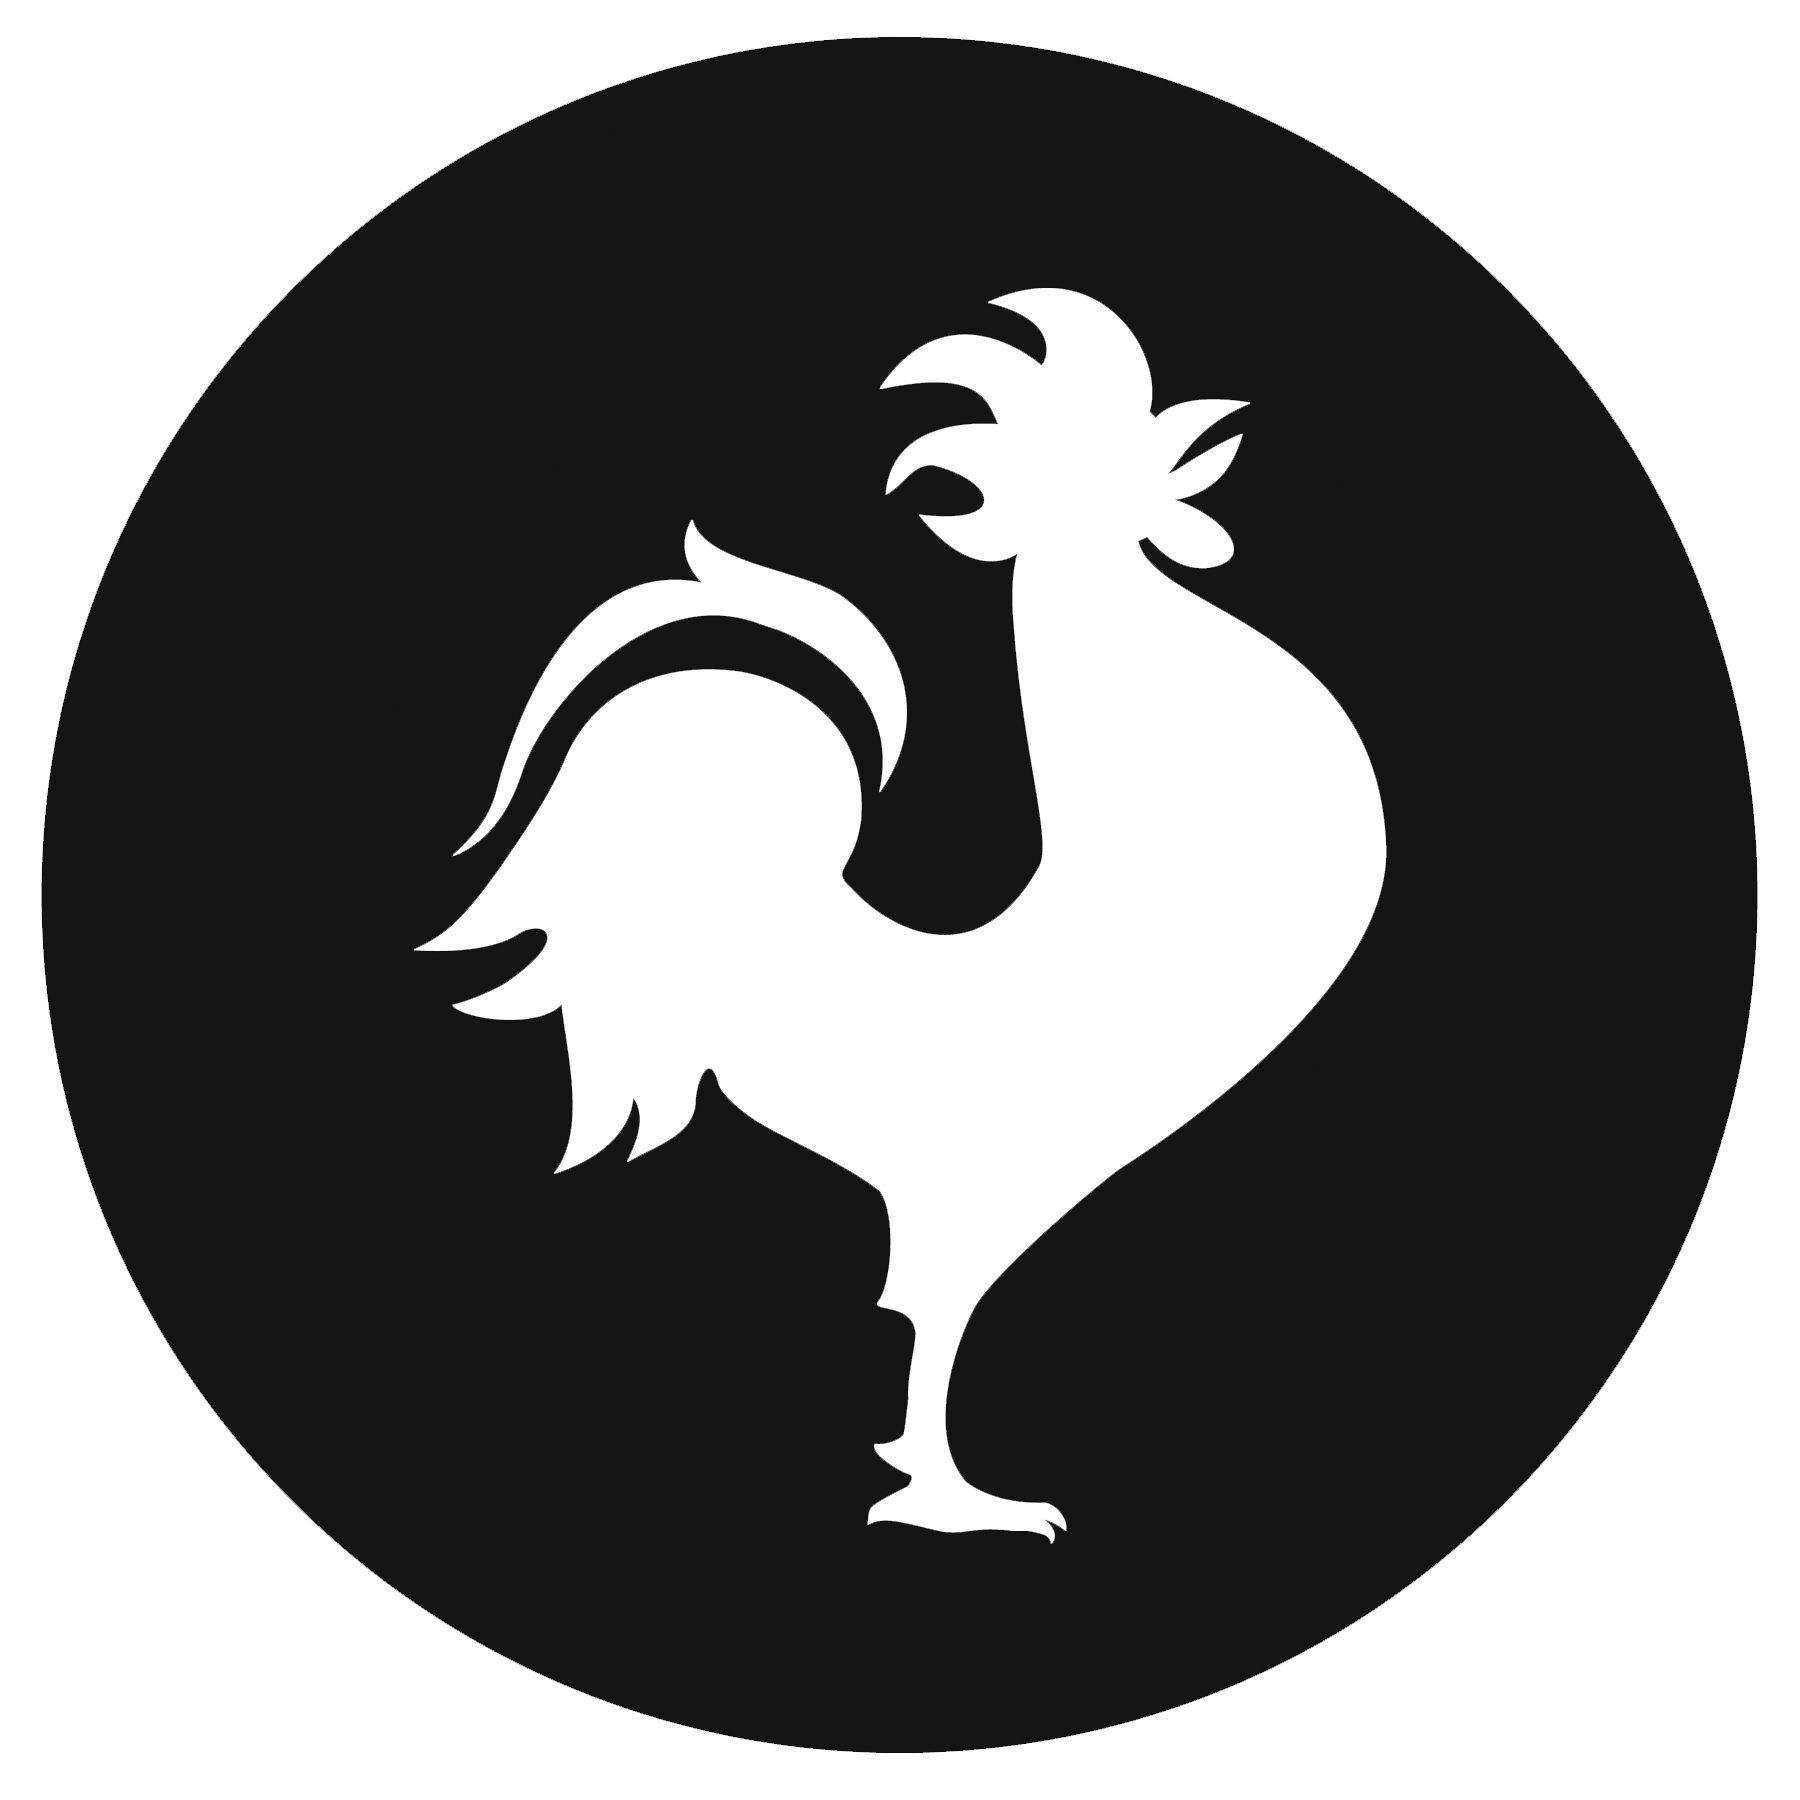 Black and White Chicken Logo - Image result for rooster logo | Logo design | Rooster logo ...